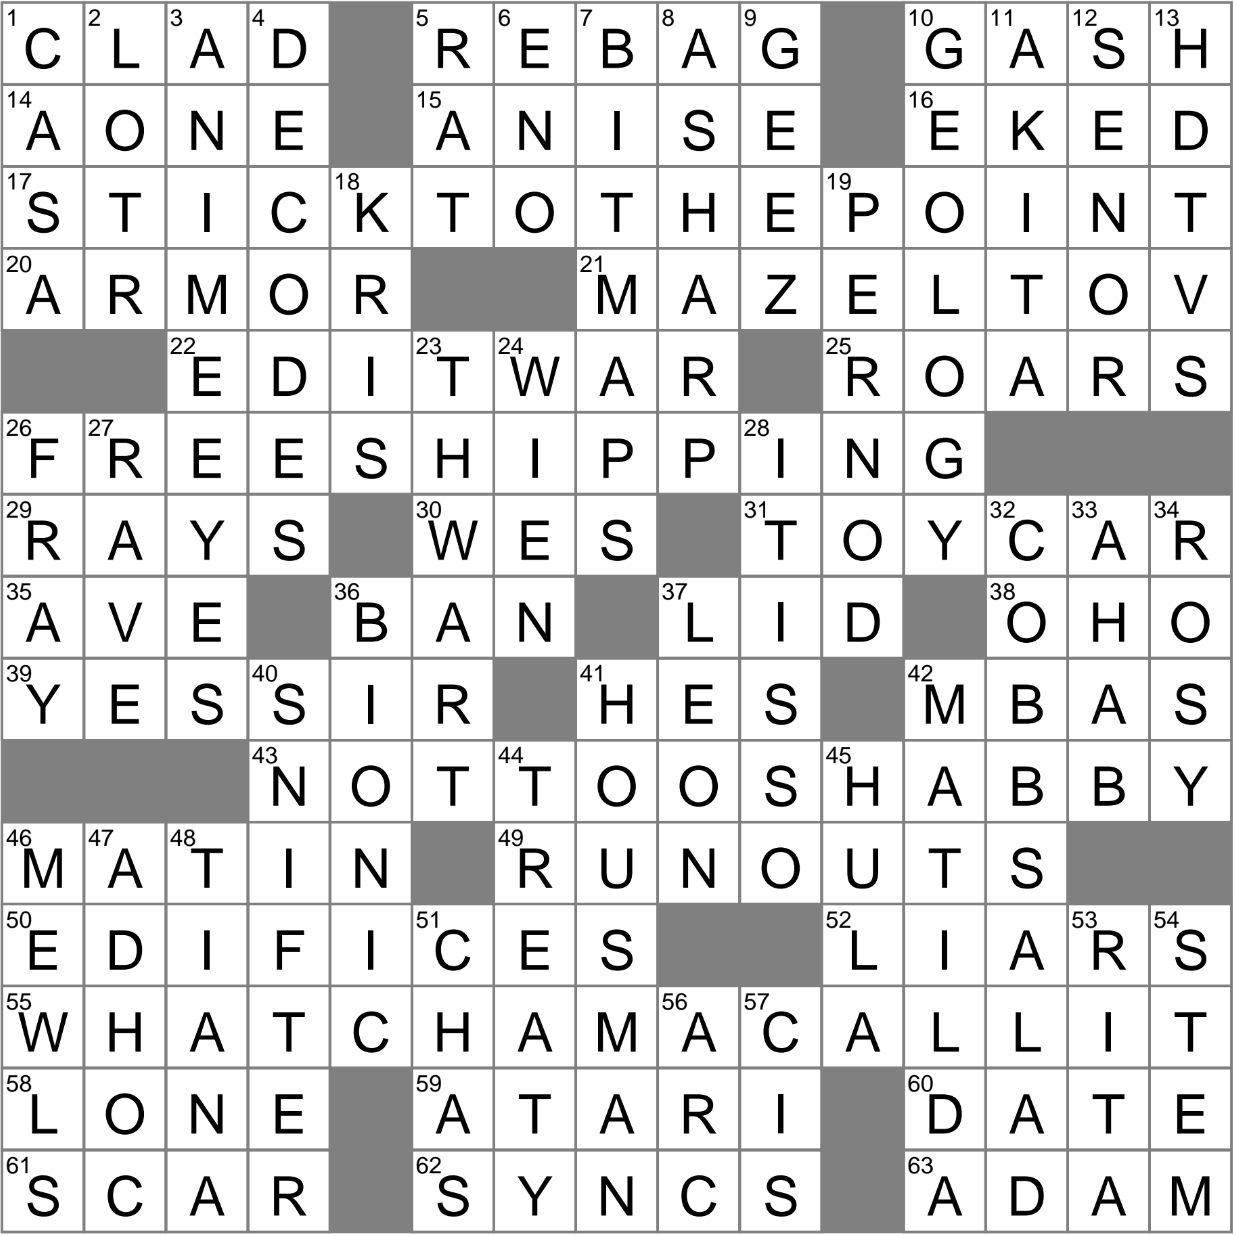 LA Times Crossword 1 Apr 23 Saturday LAXCrossword com